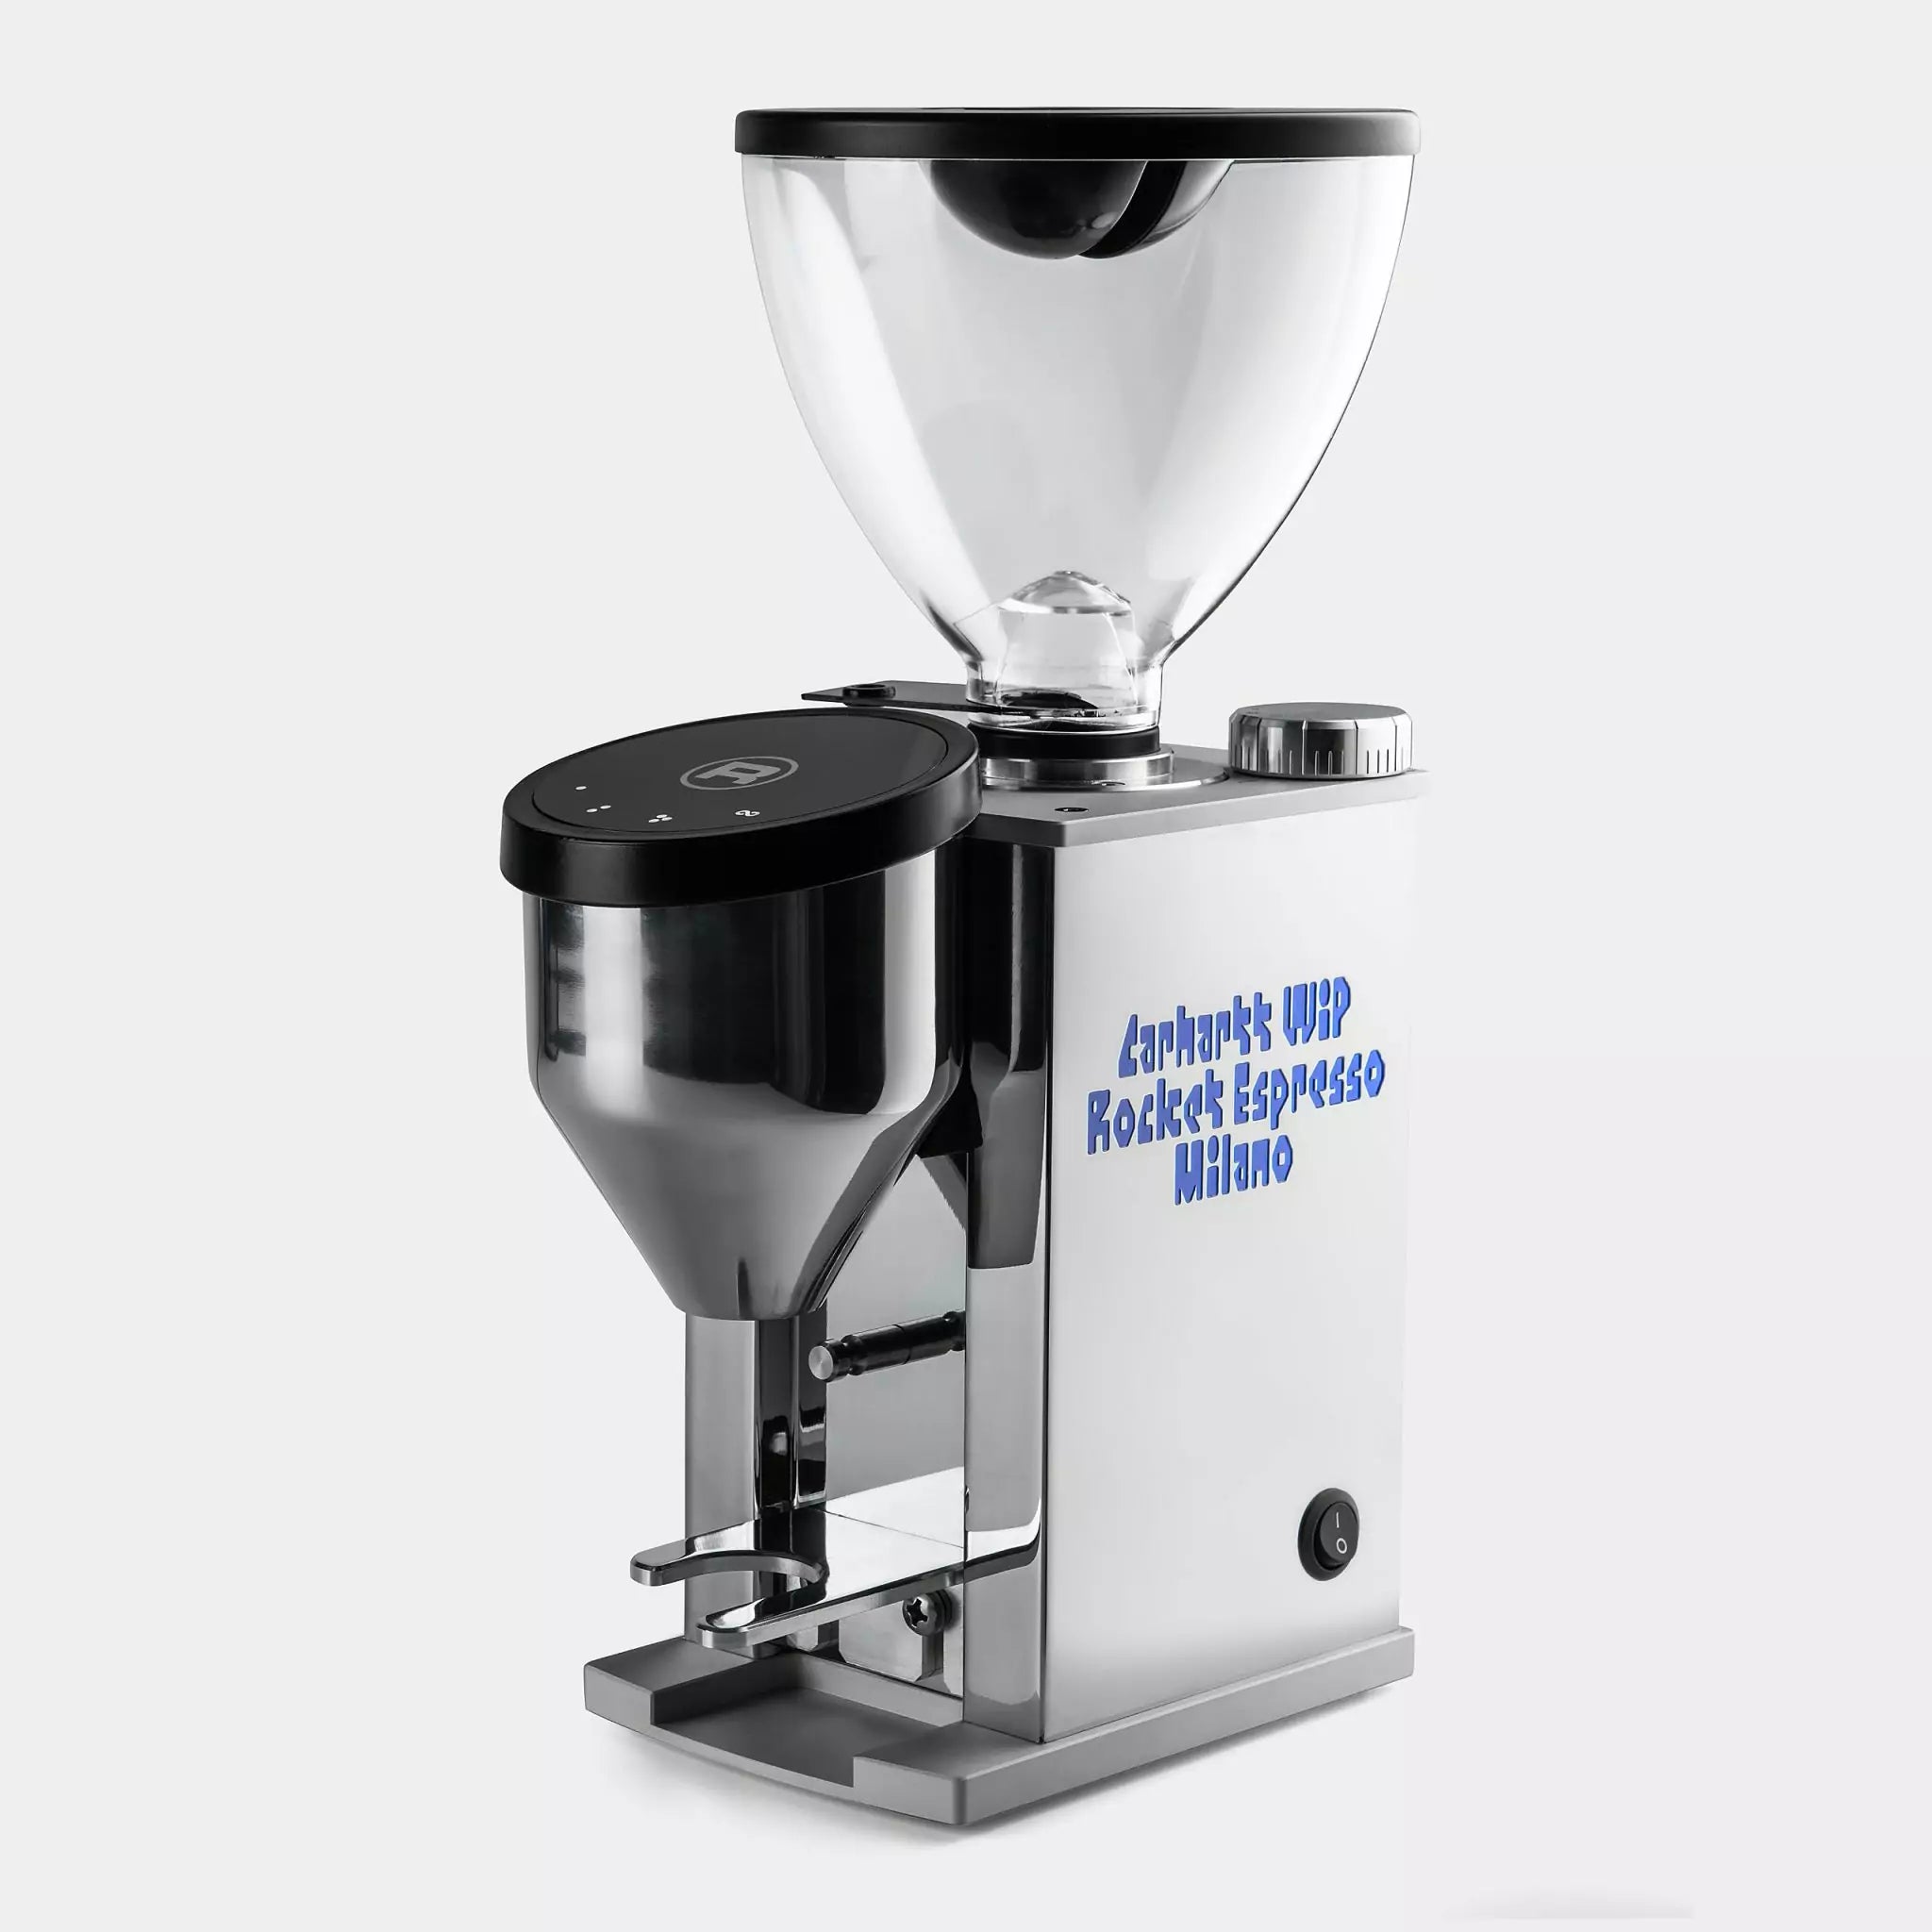 Carhartt Coffee Machine